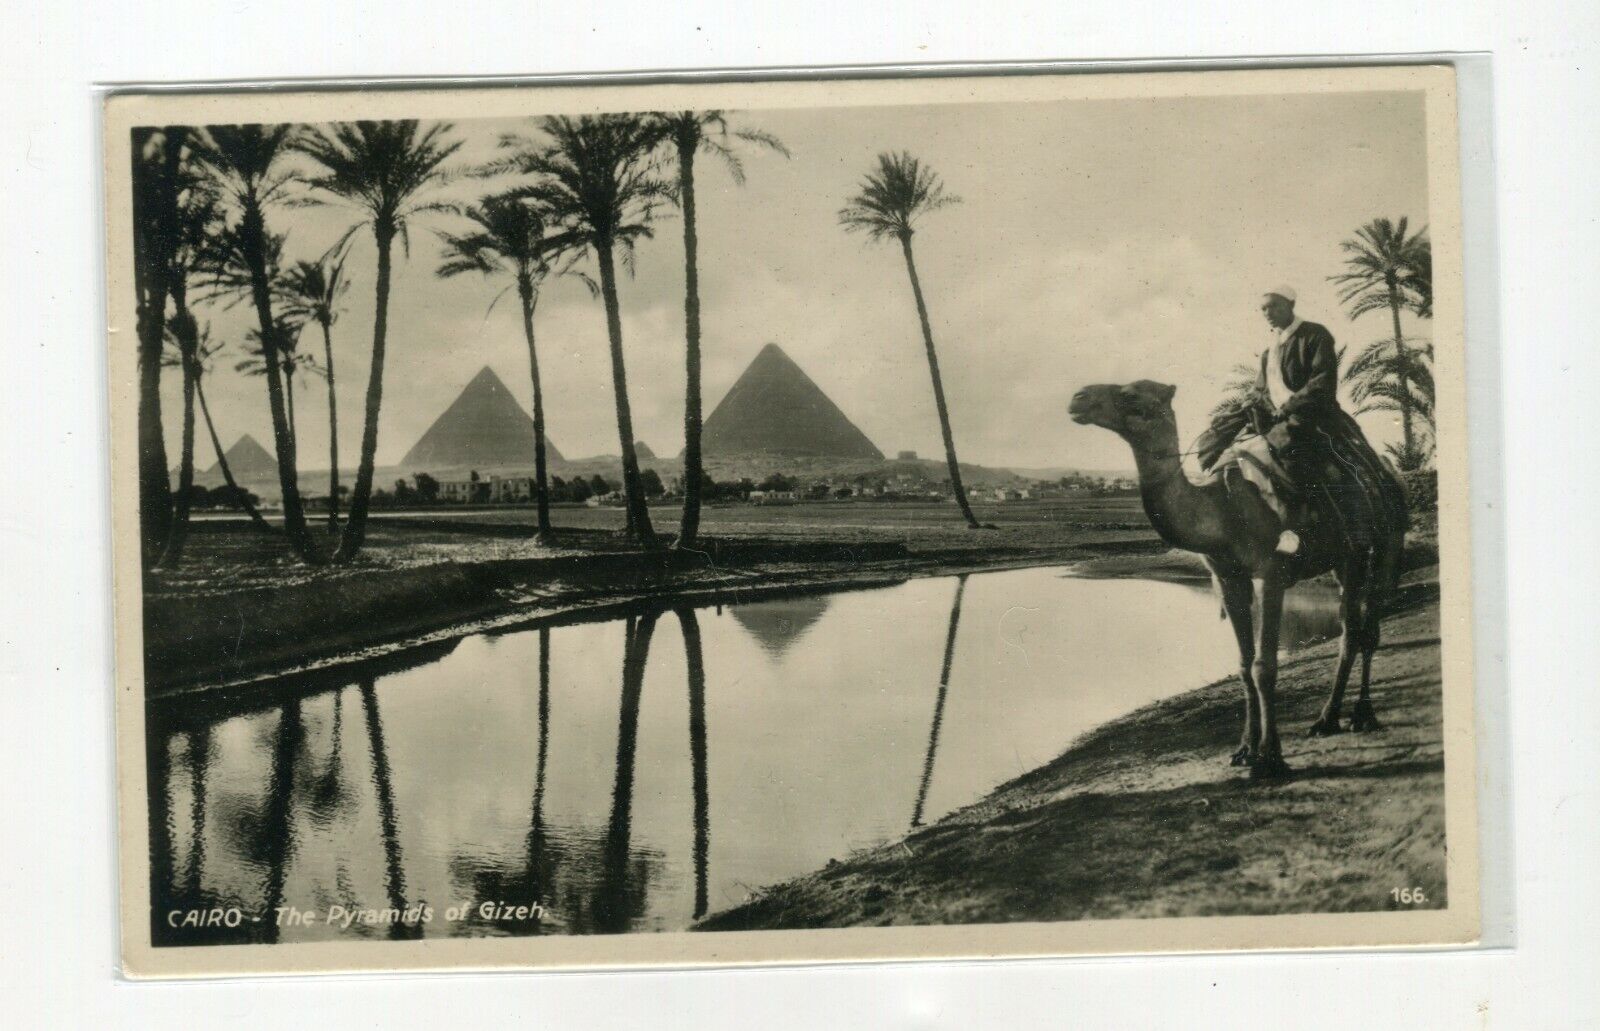 Egypt; Cairo - The Pyramids of Gizeh; Lehnert & Landrock Vintage Postcard rppc